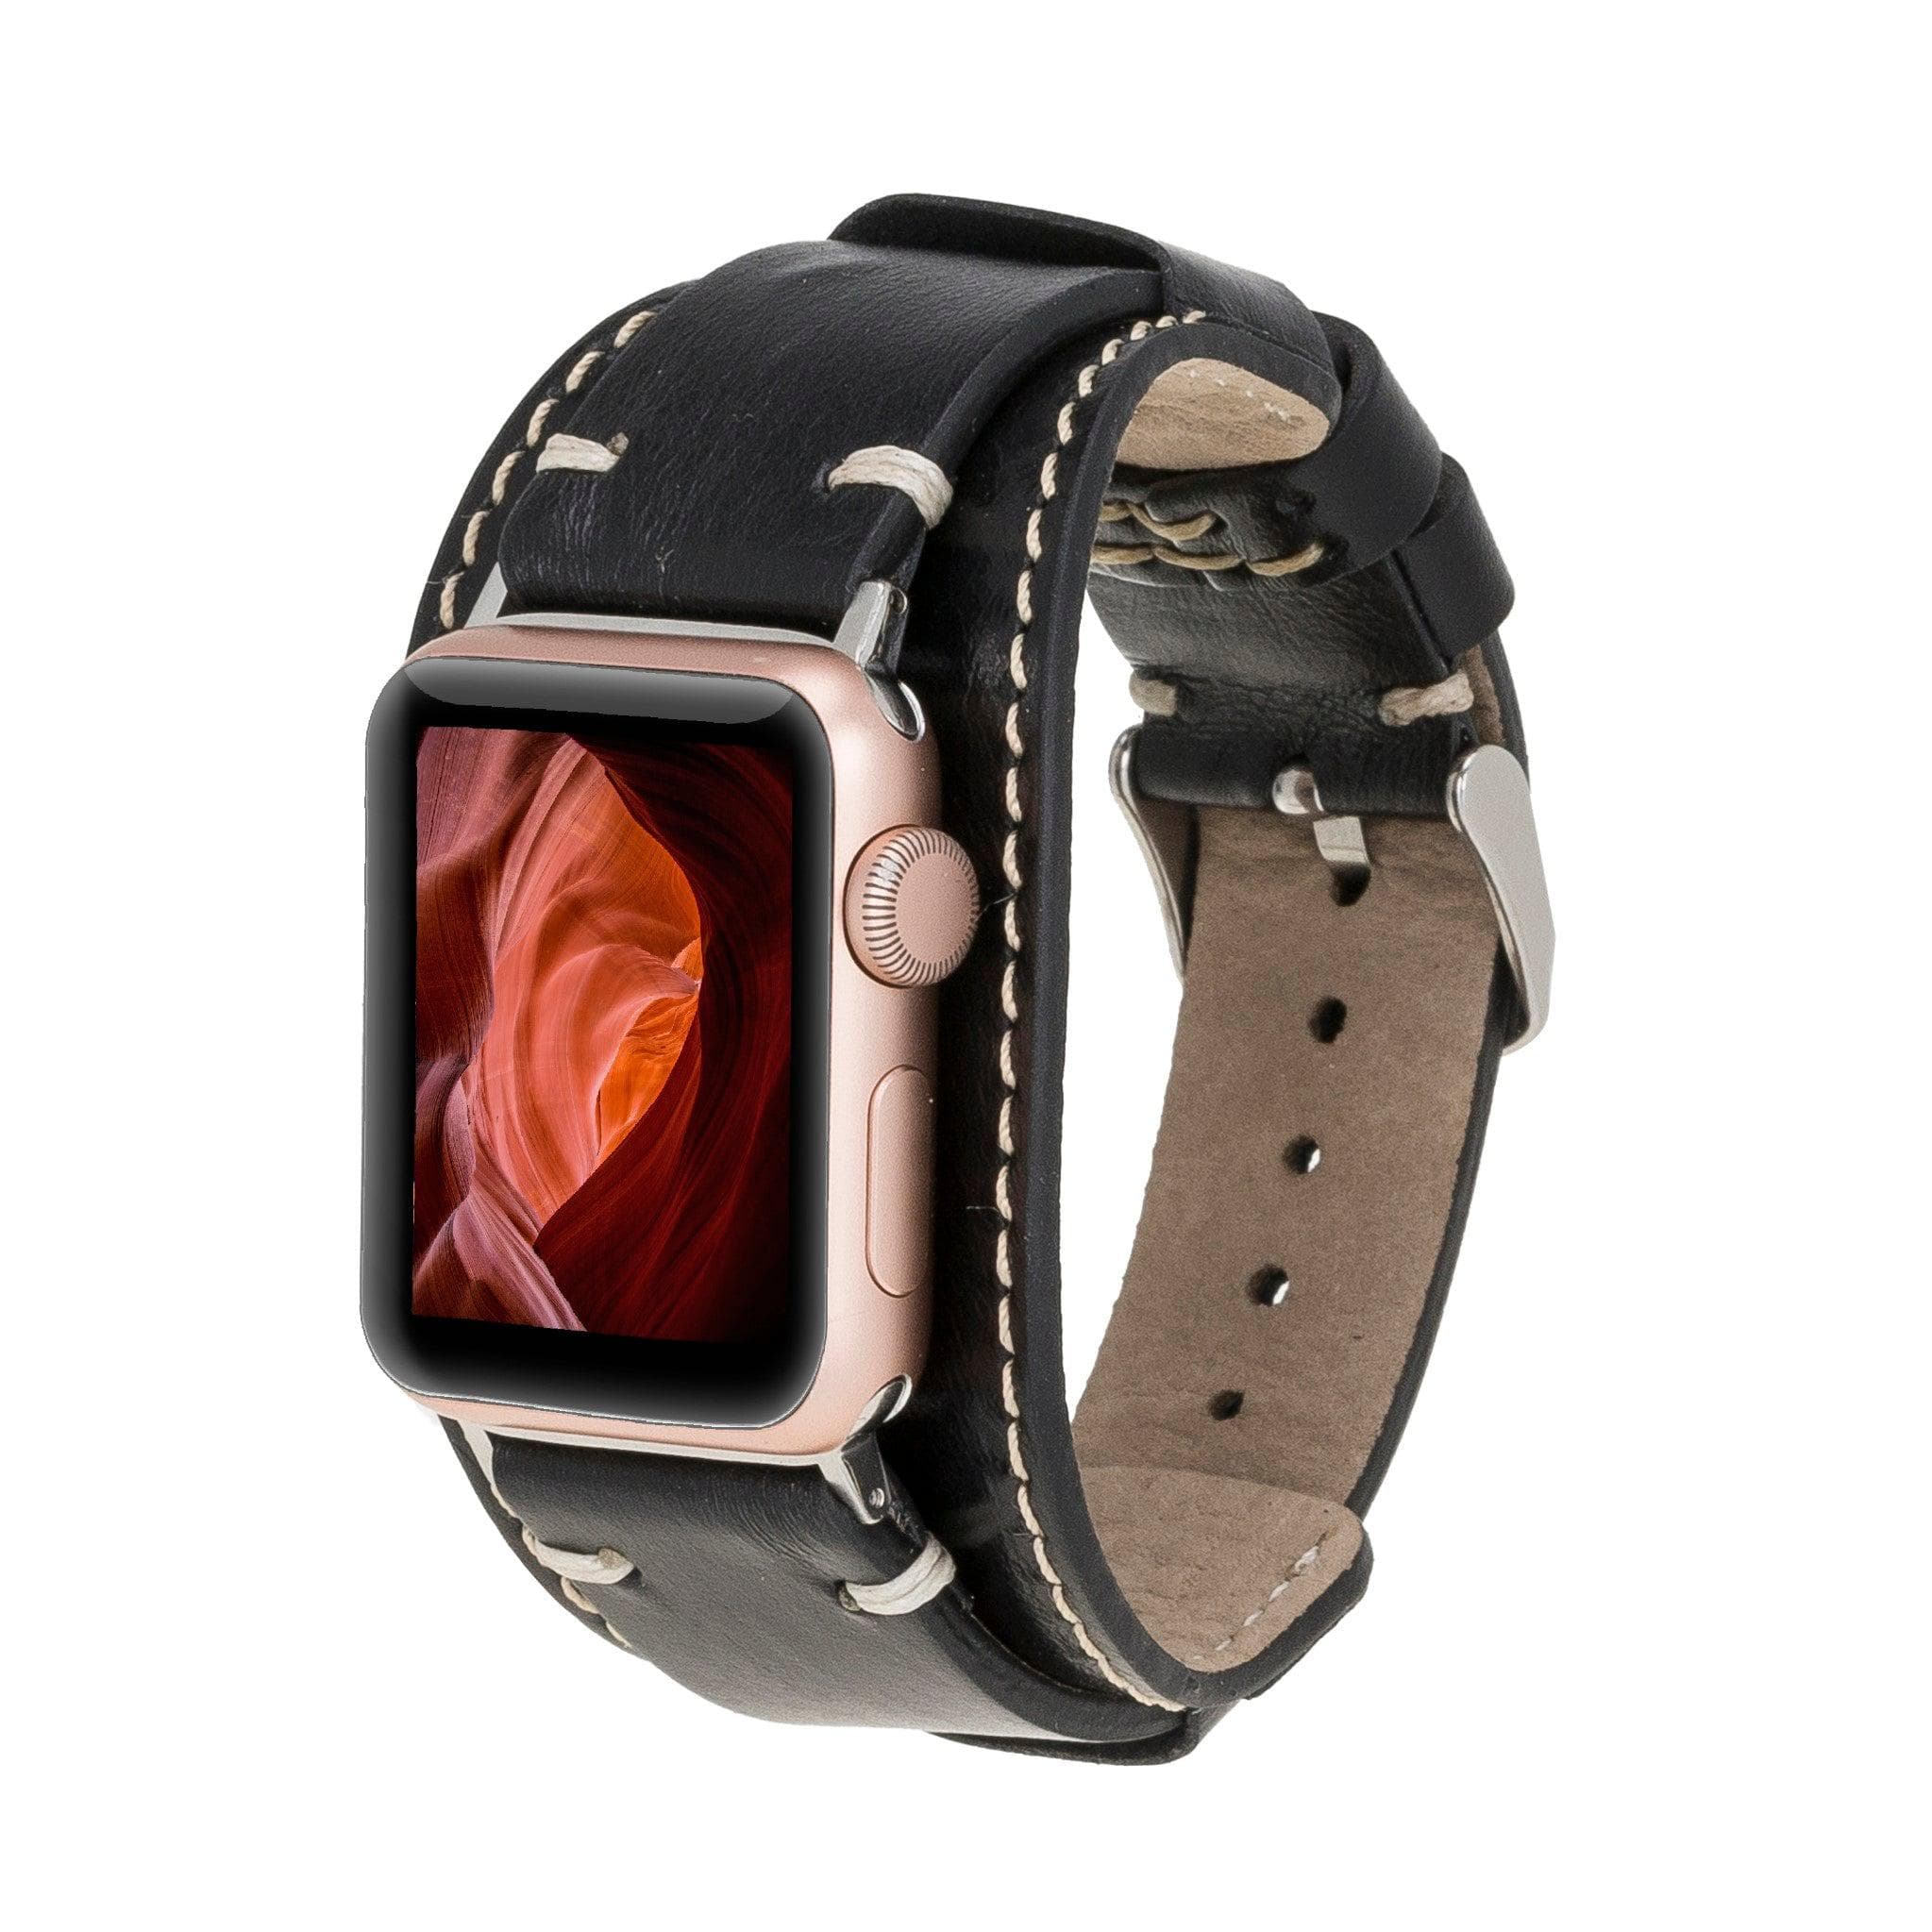 B2B - Leather Apple Watch Bands - Cuff Style RST1 Bomonti